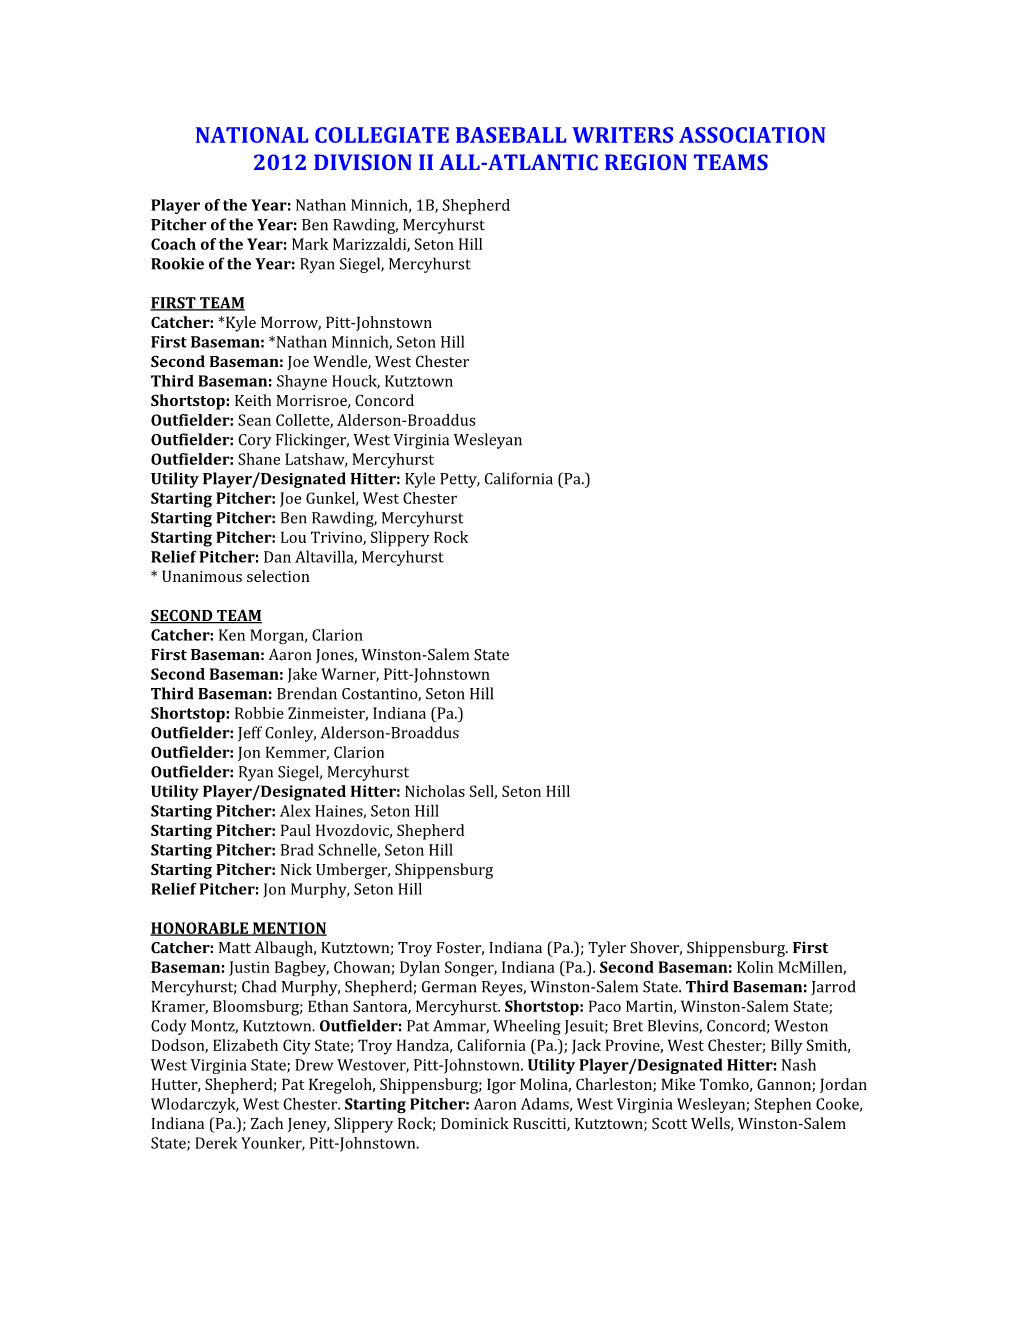 National Collegiate Baseball Writers Association 2012 Division Ii All-Atlantic Region Teams